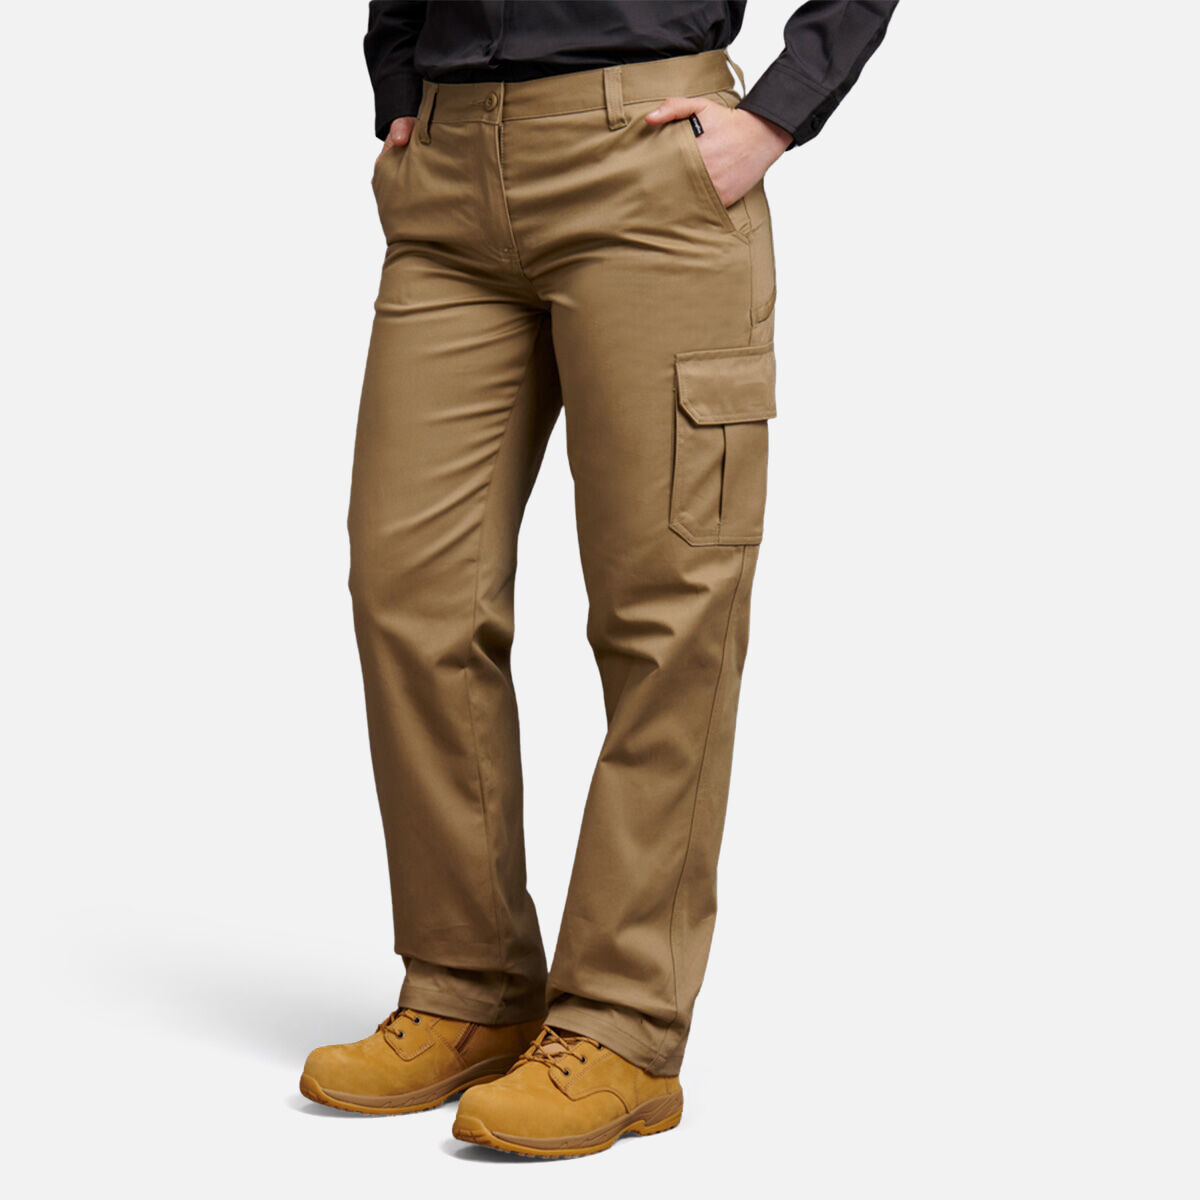 BigBEE CARGO PANTS Work Trousers KNEE POCKET Strechy Cotton Drill UPF 50+  Reflective tape - NAVYREFLECTIVE | Catch.com.au